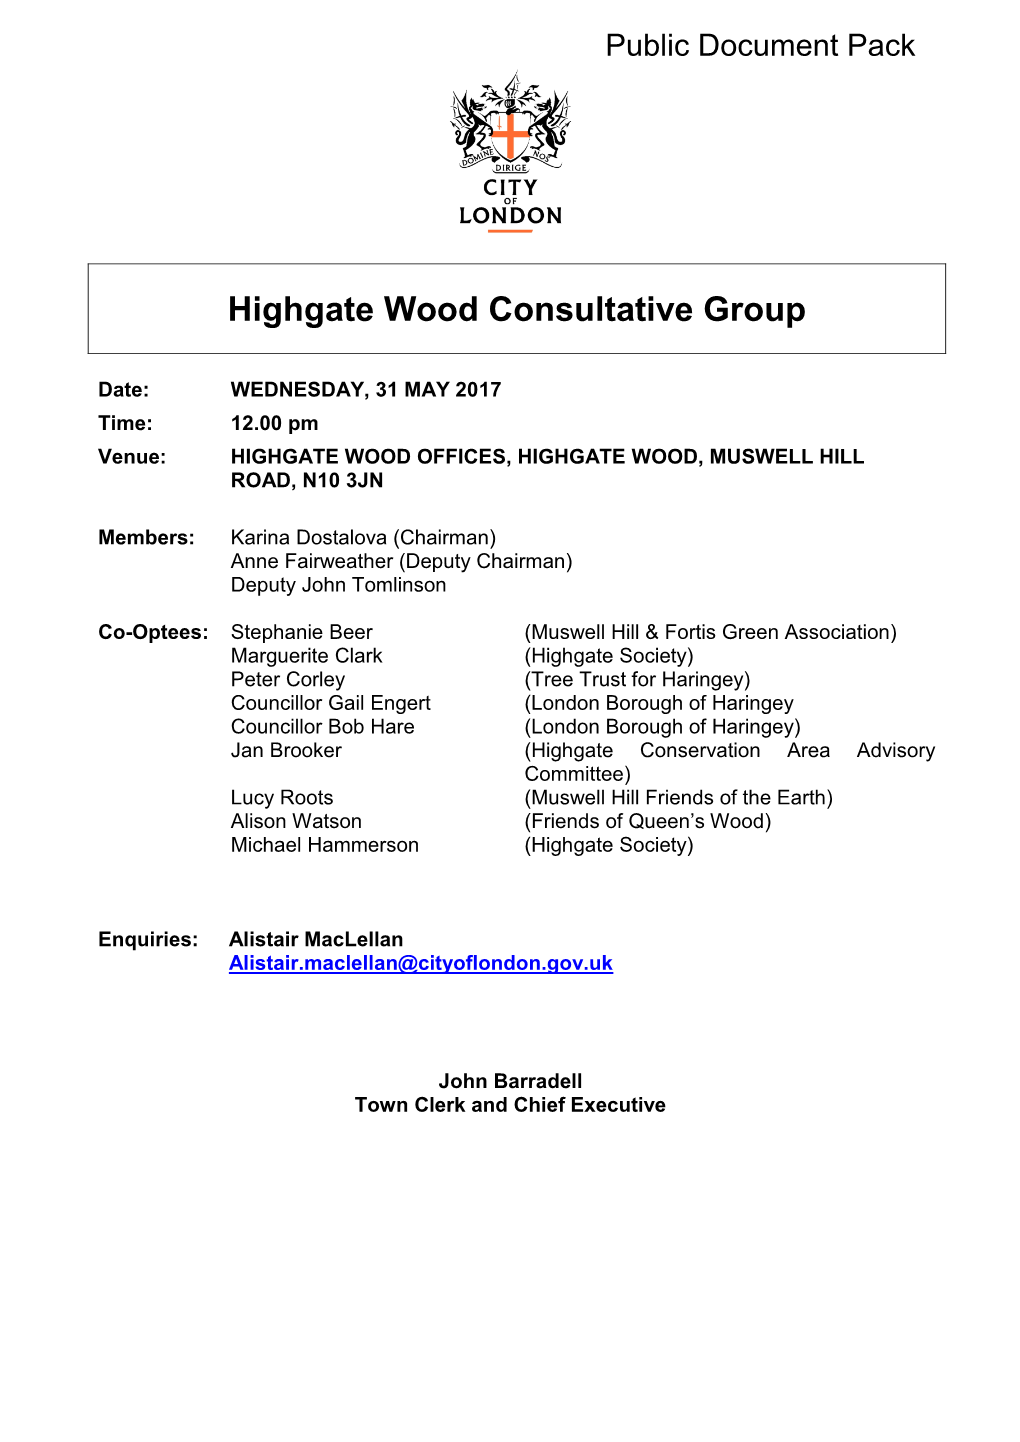 (Public Pack)Agenda Document for Highgate Wood Consultative Group